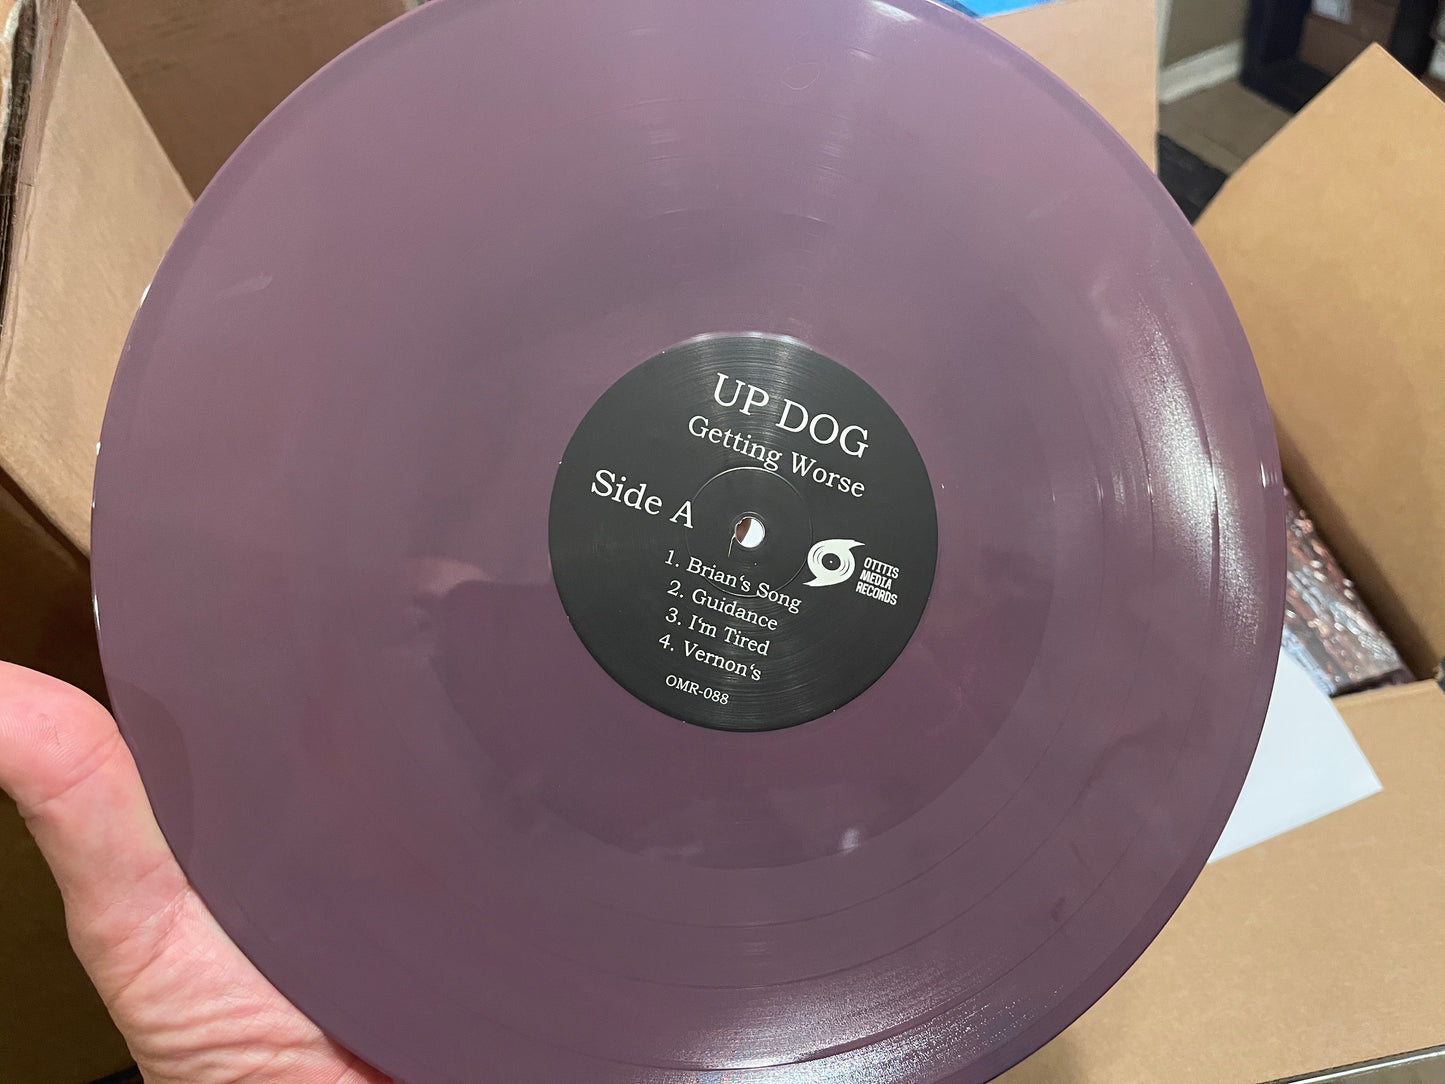 OMR-088 UpDog “Getting Worse” LP/CD